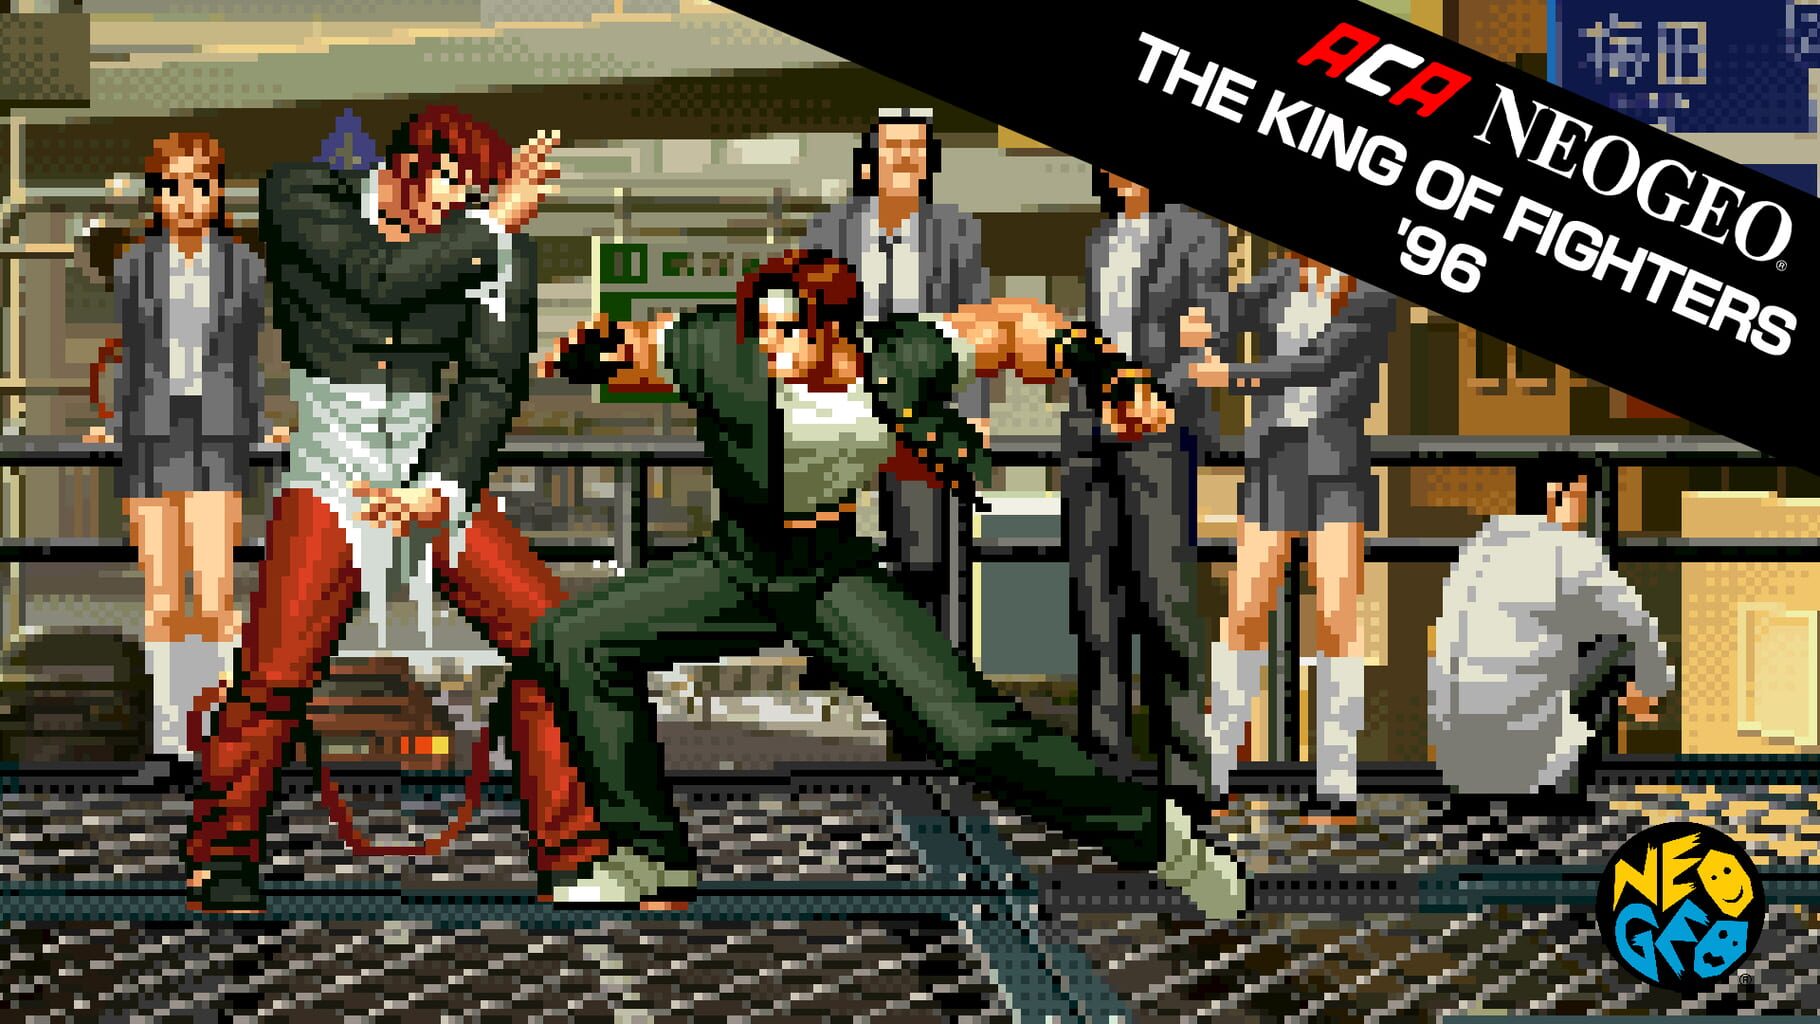 ACA Neo Geo: The King of Fighters '96 artwork